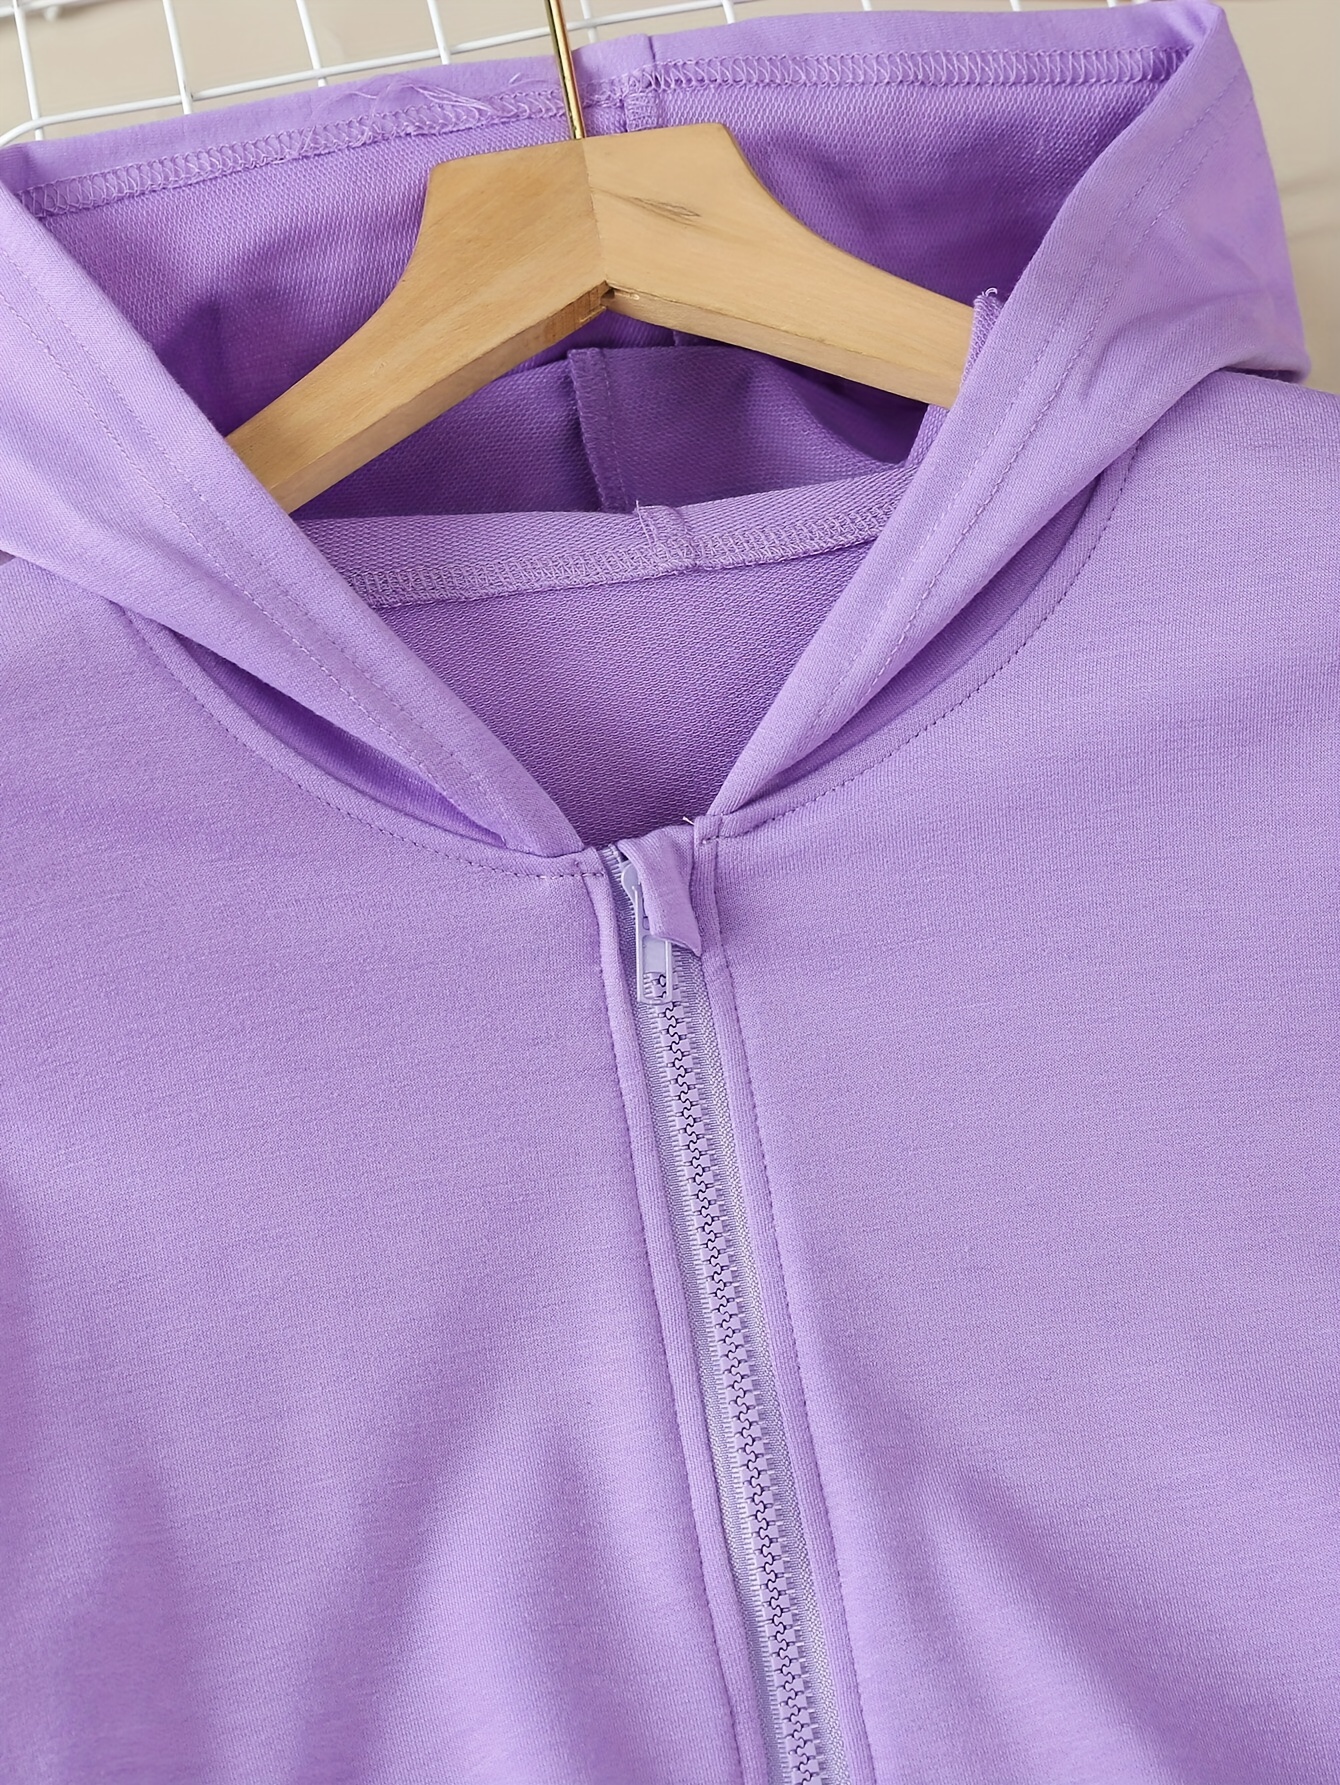 CAMI Purple Leggings - TIYE the coolest sportswear & gym apparel